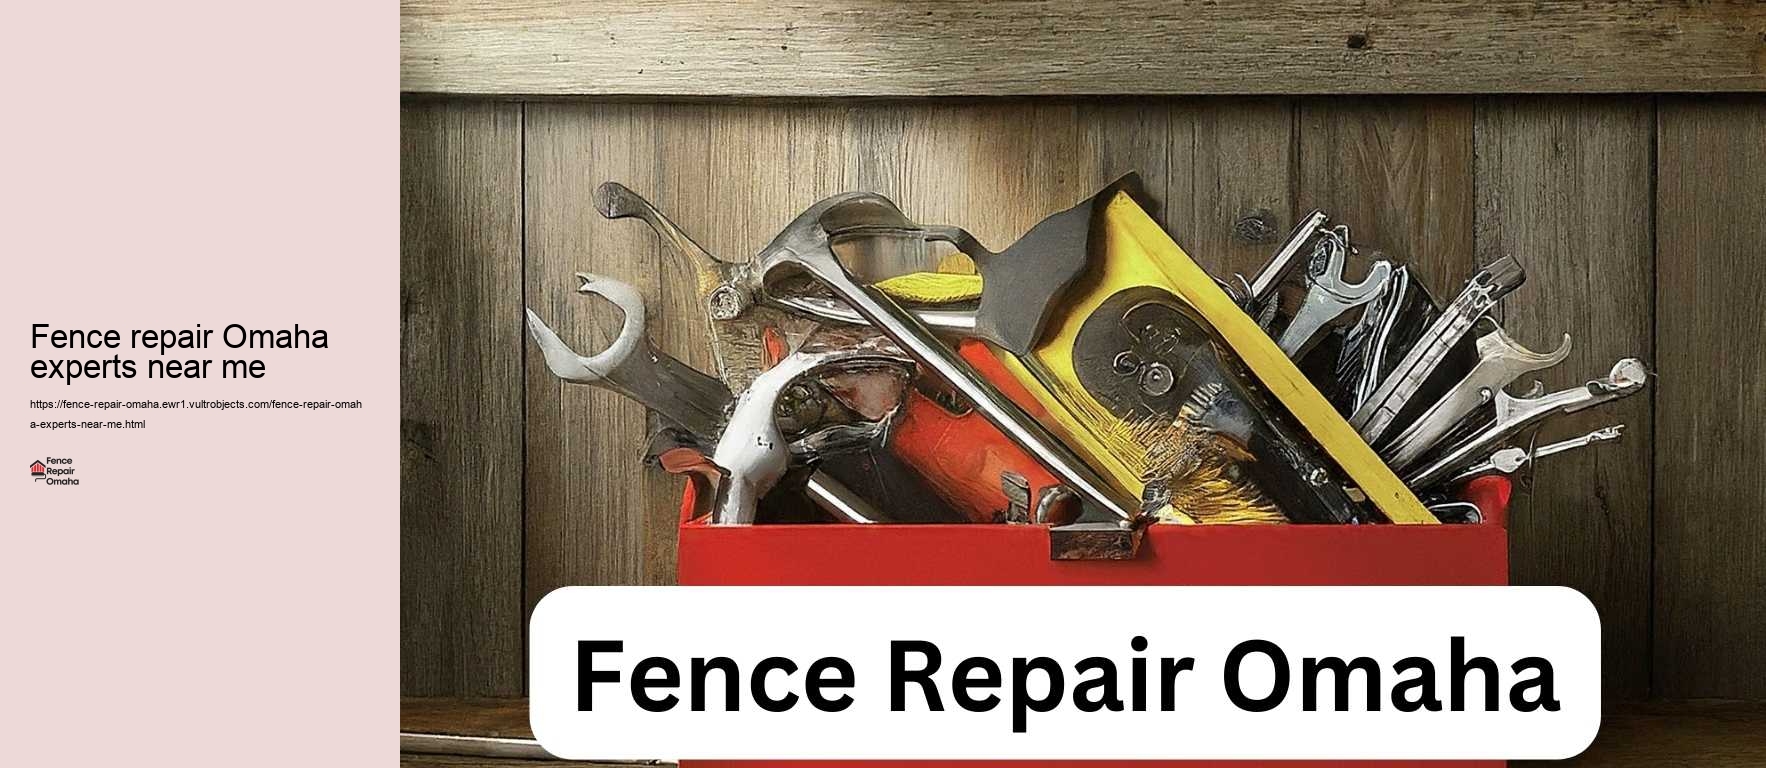 Fence repair Omaha experts near me